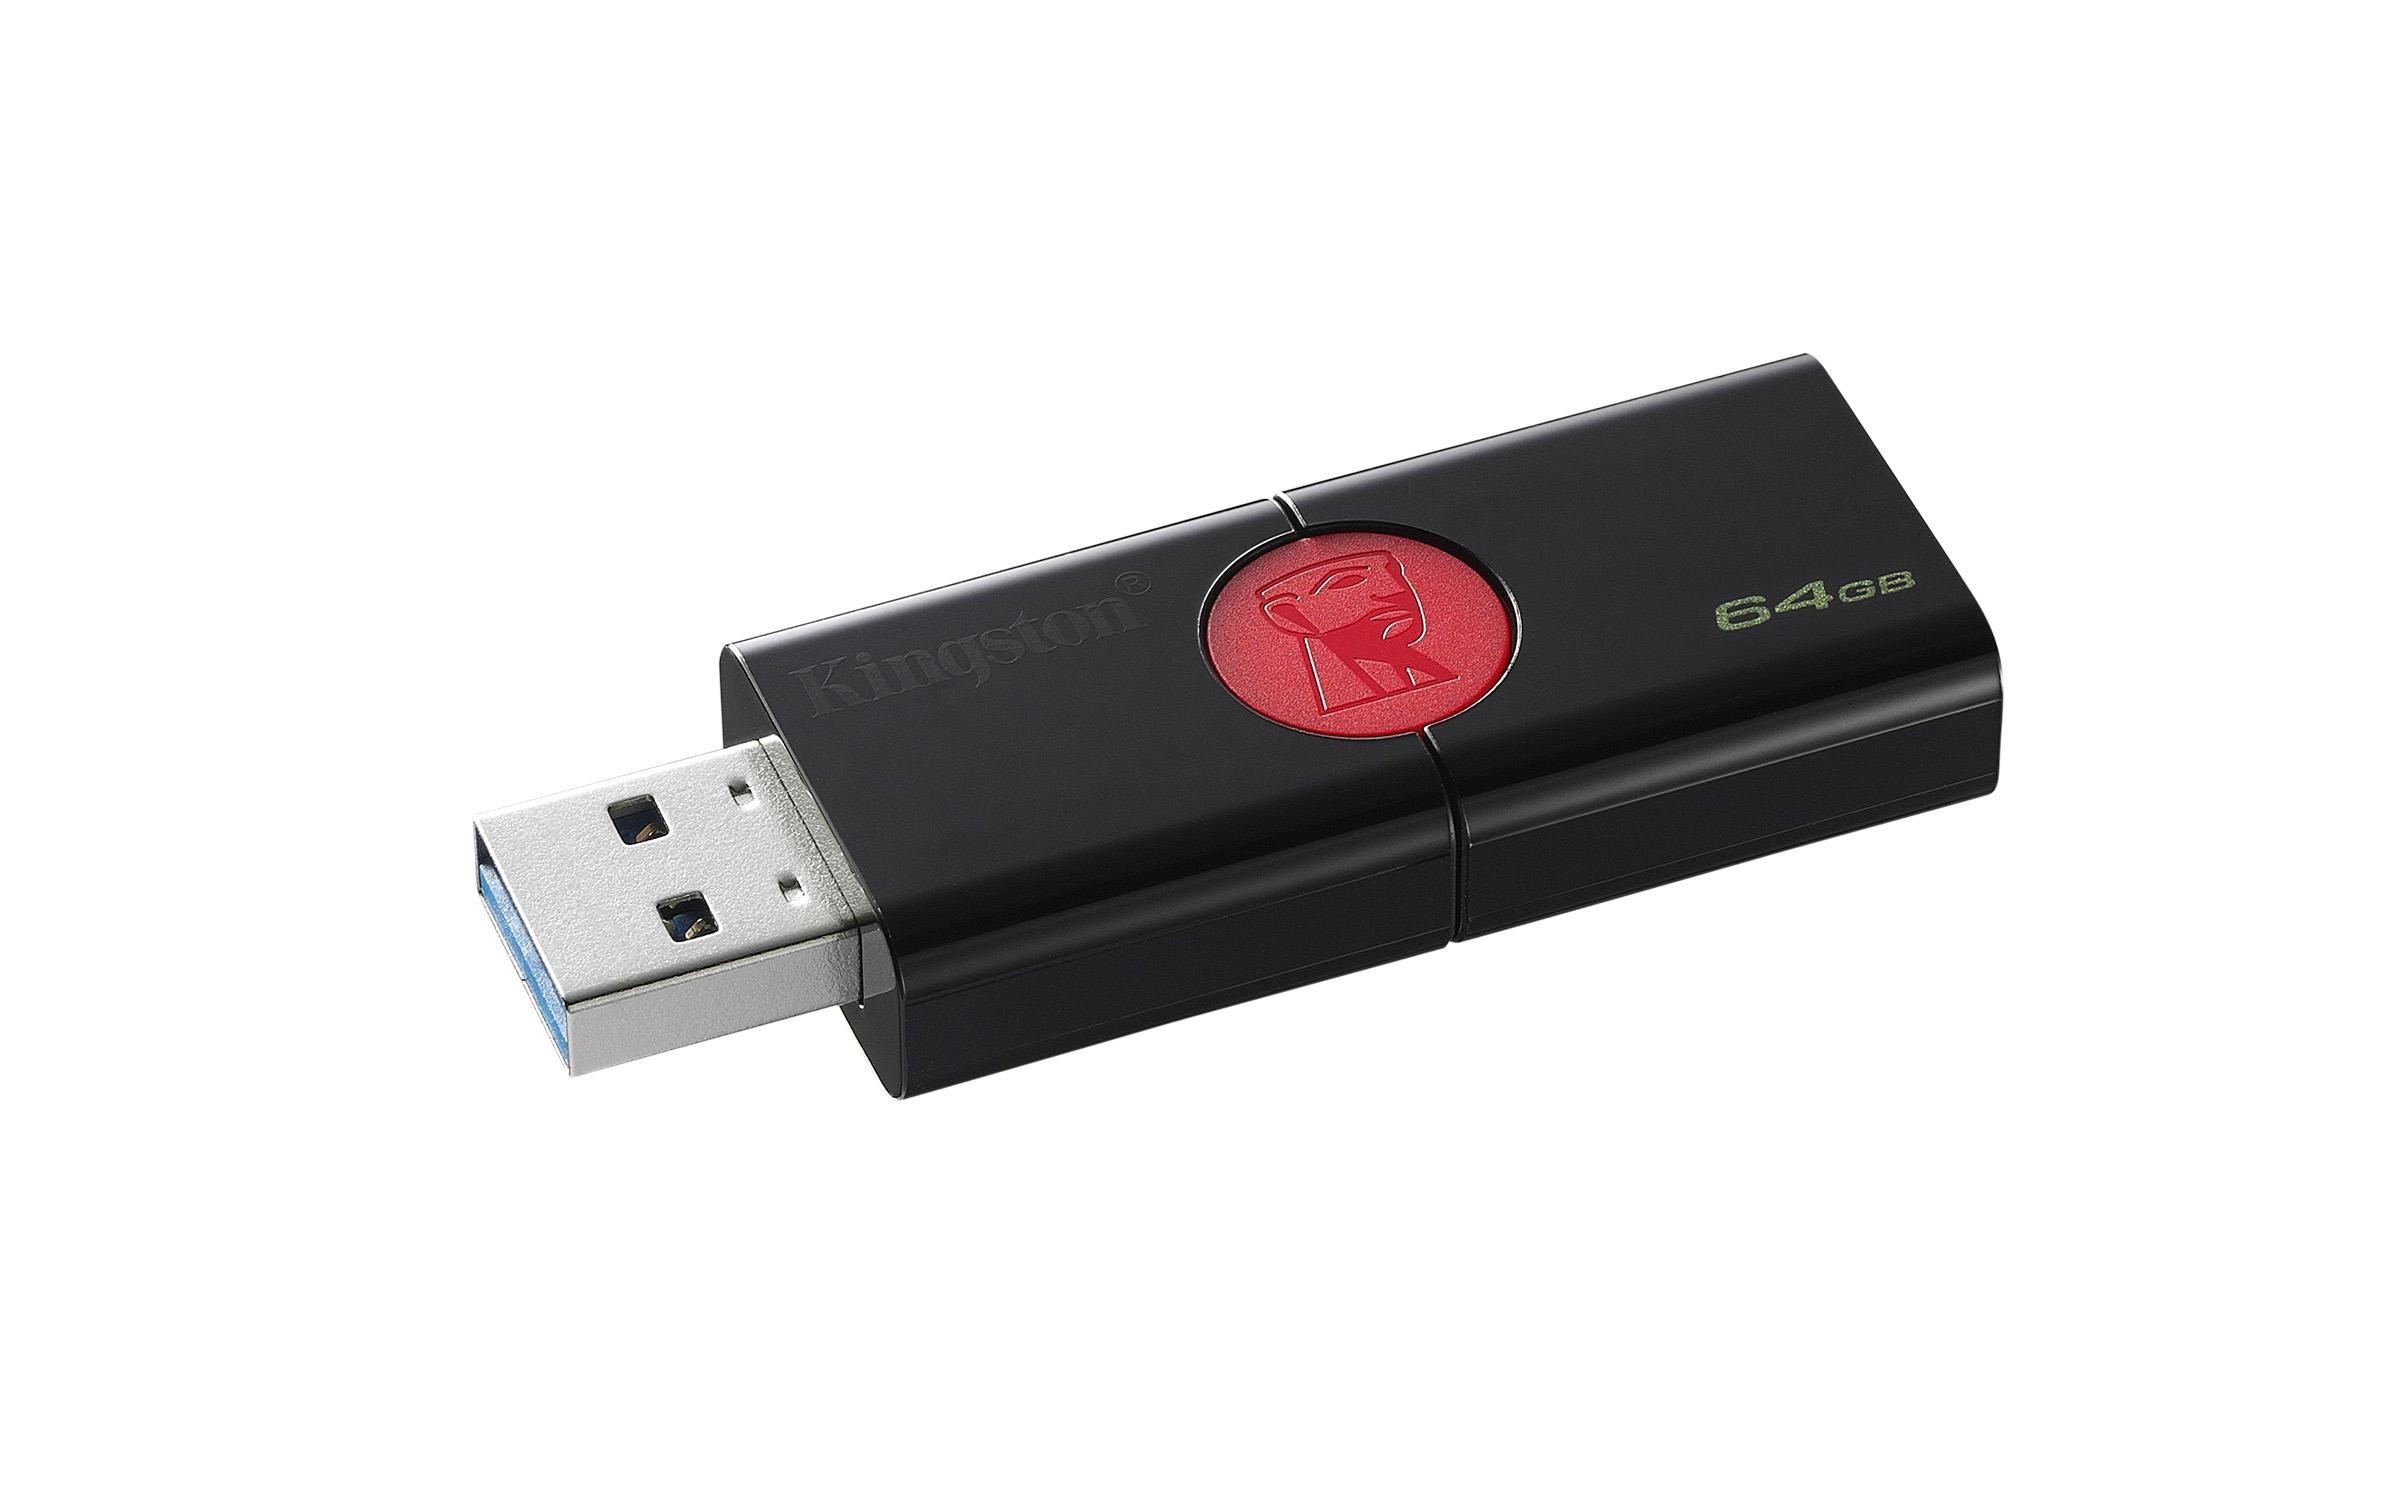 Cl USB 3.0 Kingston DataTraveler 106 64 Go , informatique ile de la runion